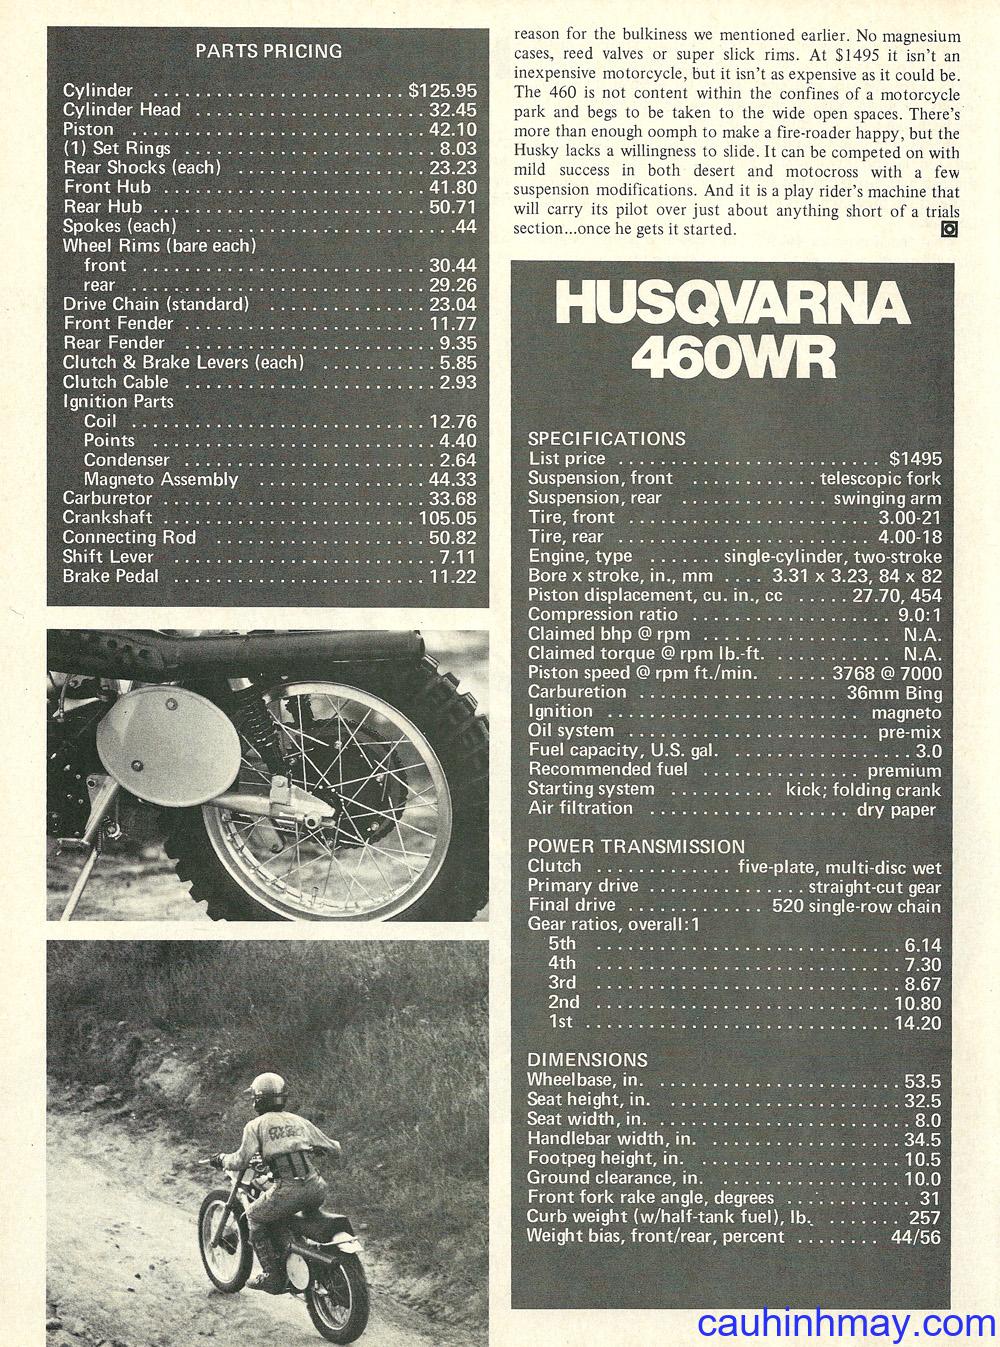 1975 HUSQVARNA 460WR - cauhinhmay.com